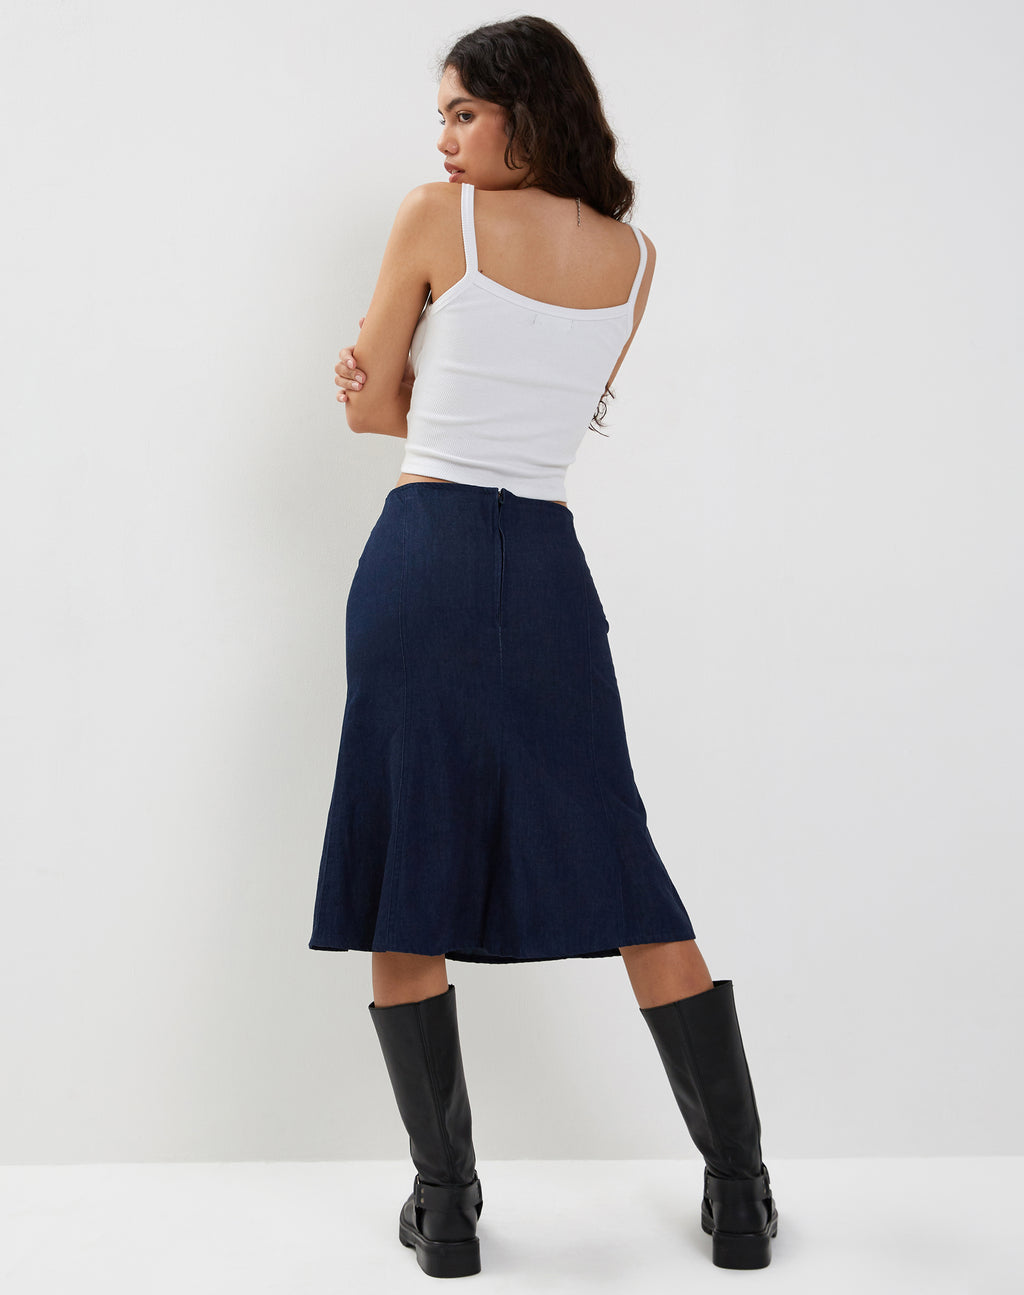 Eames Midi Skirt in Denim Indigo Blue